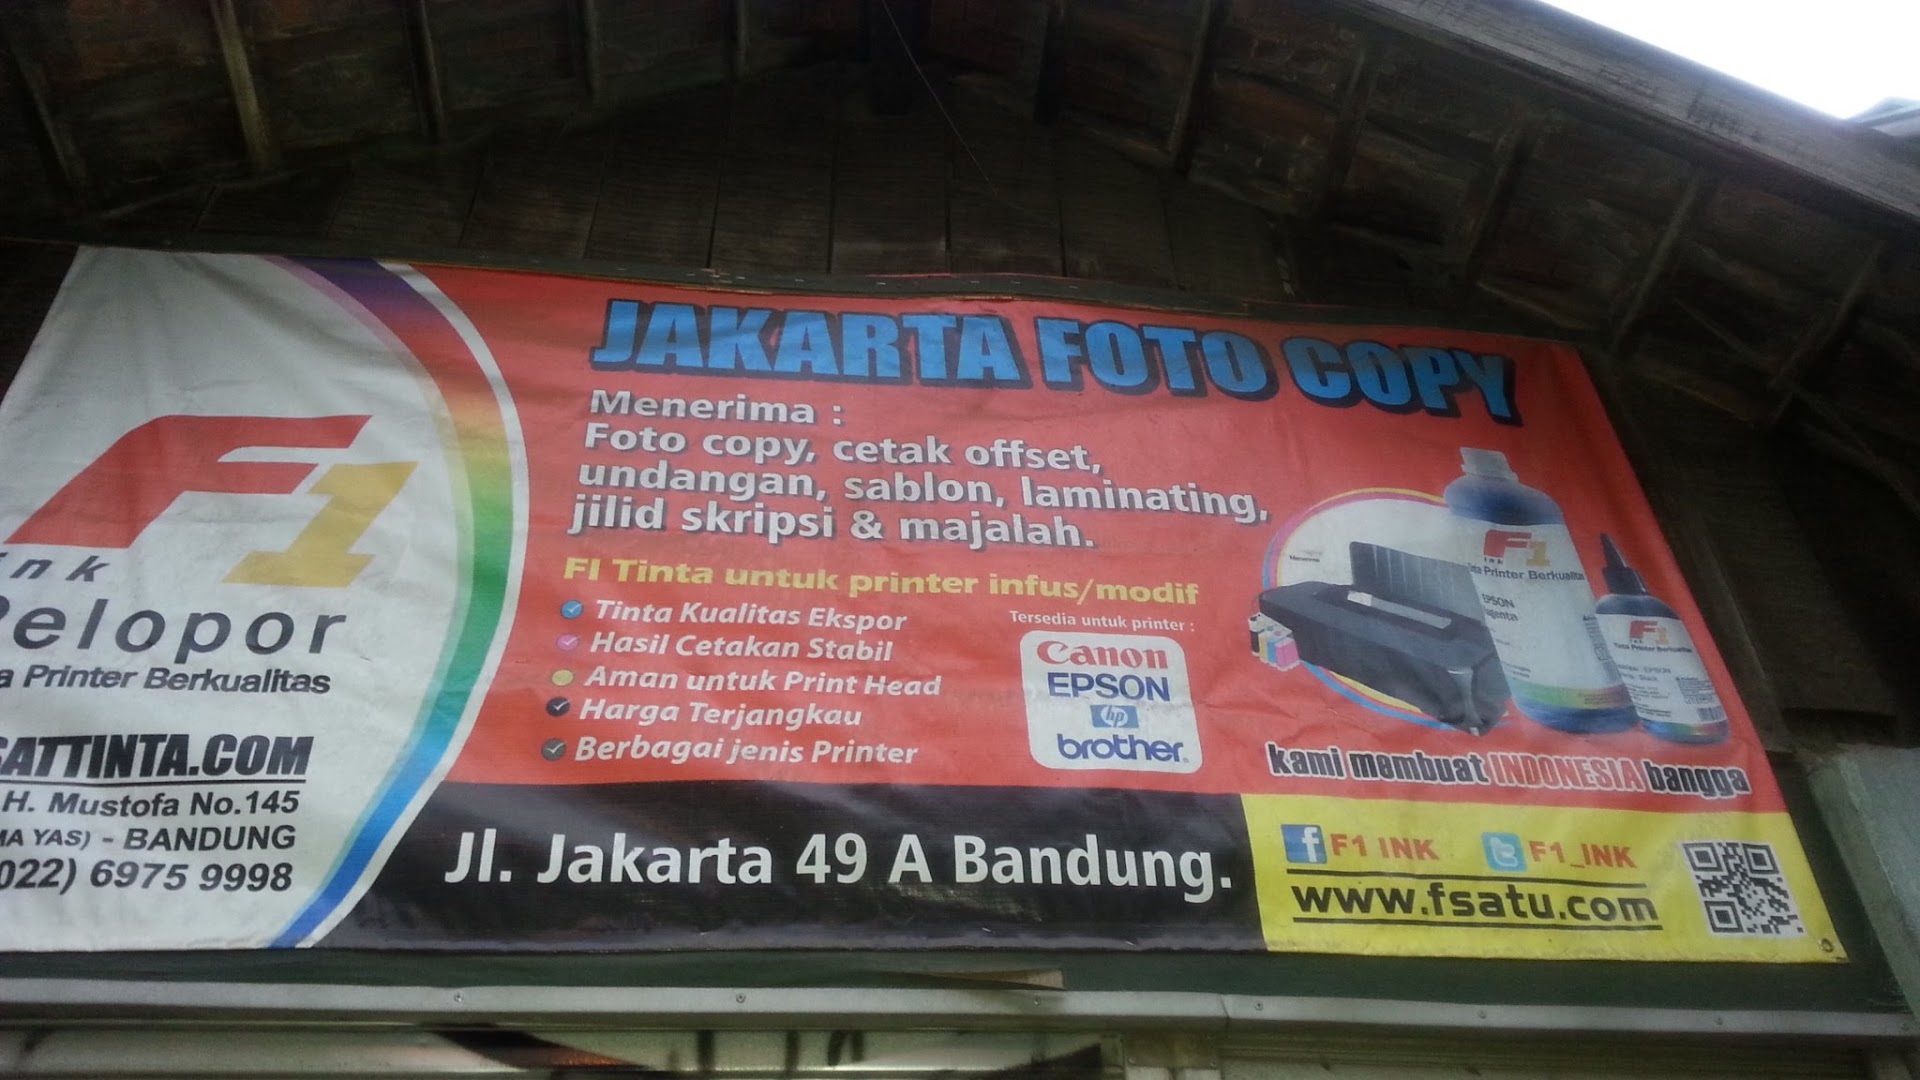 Jakarta Fotocopy Photo